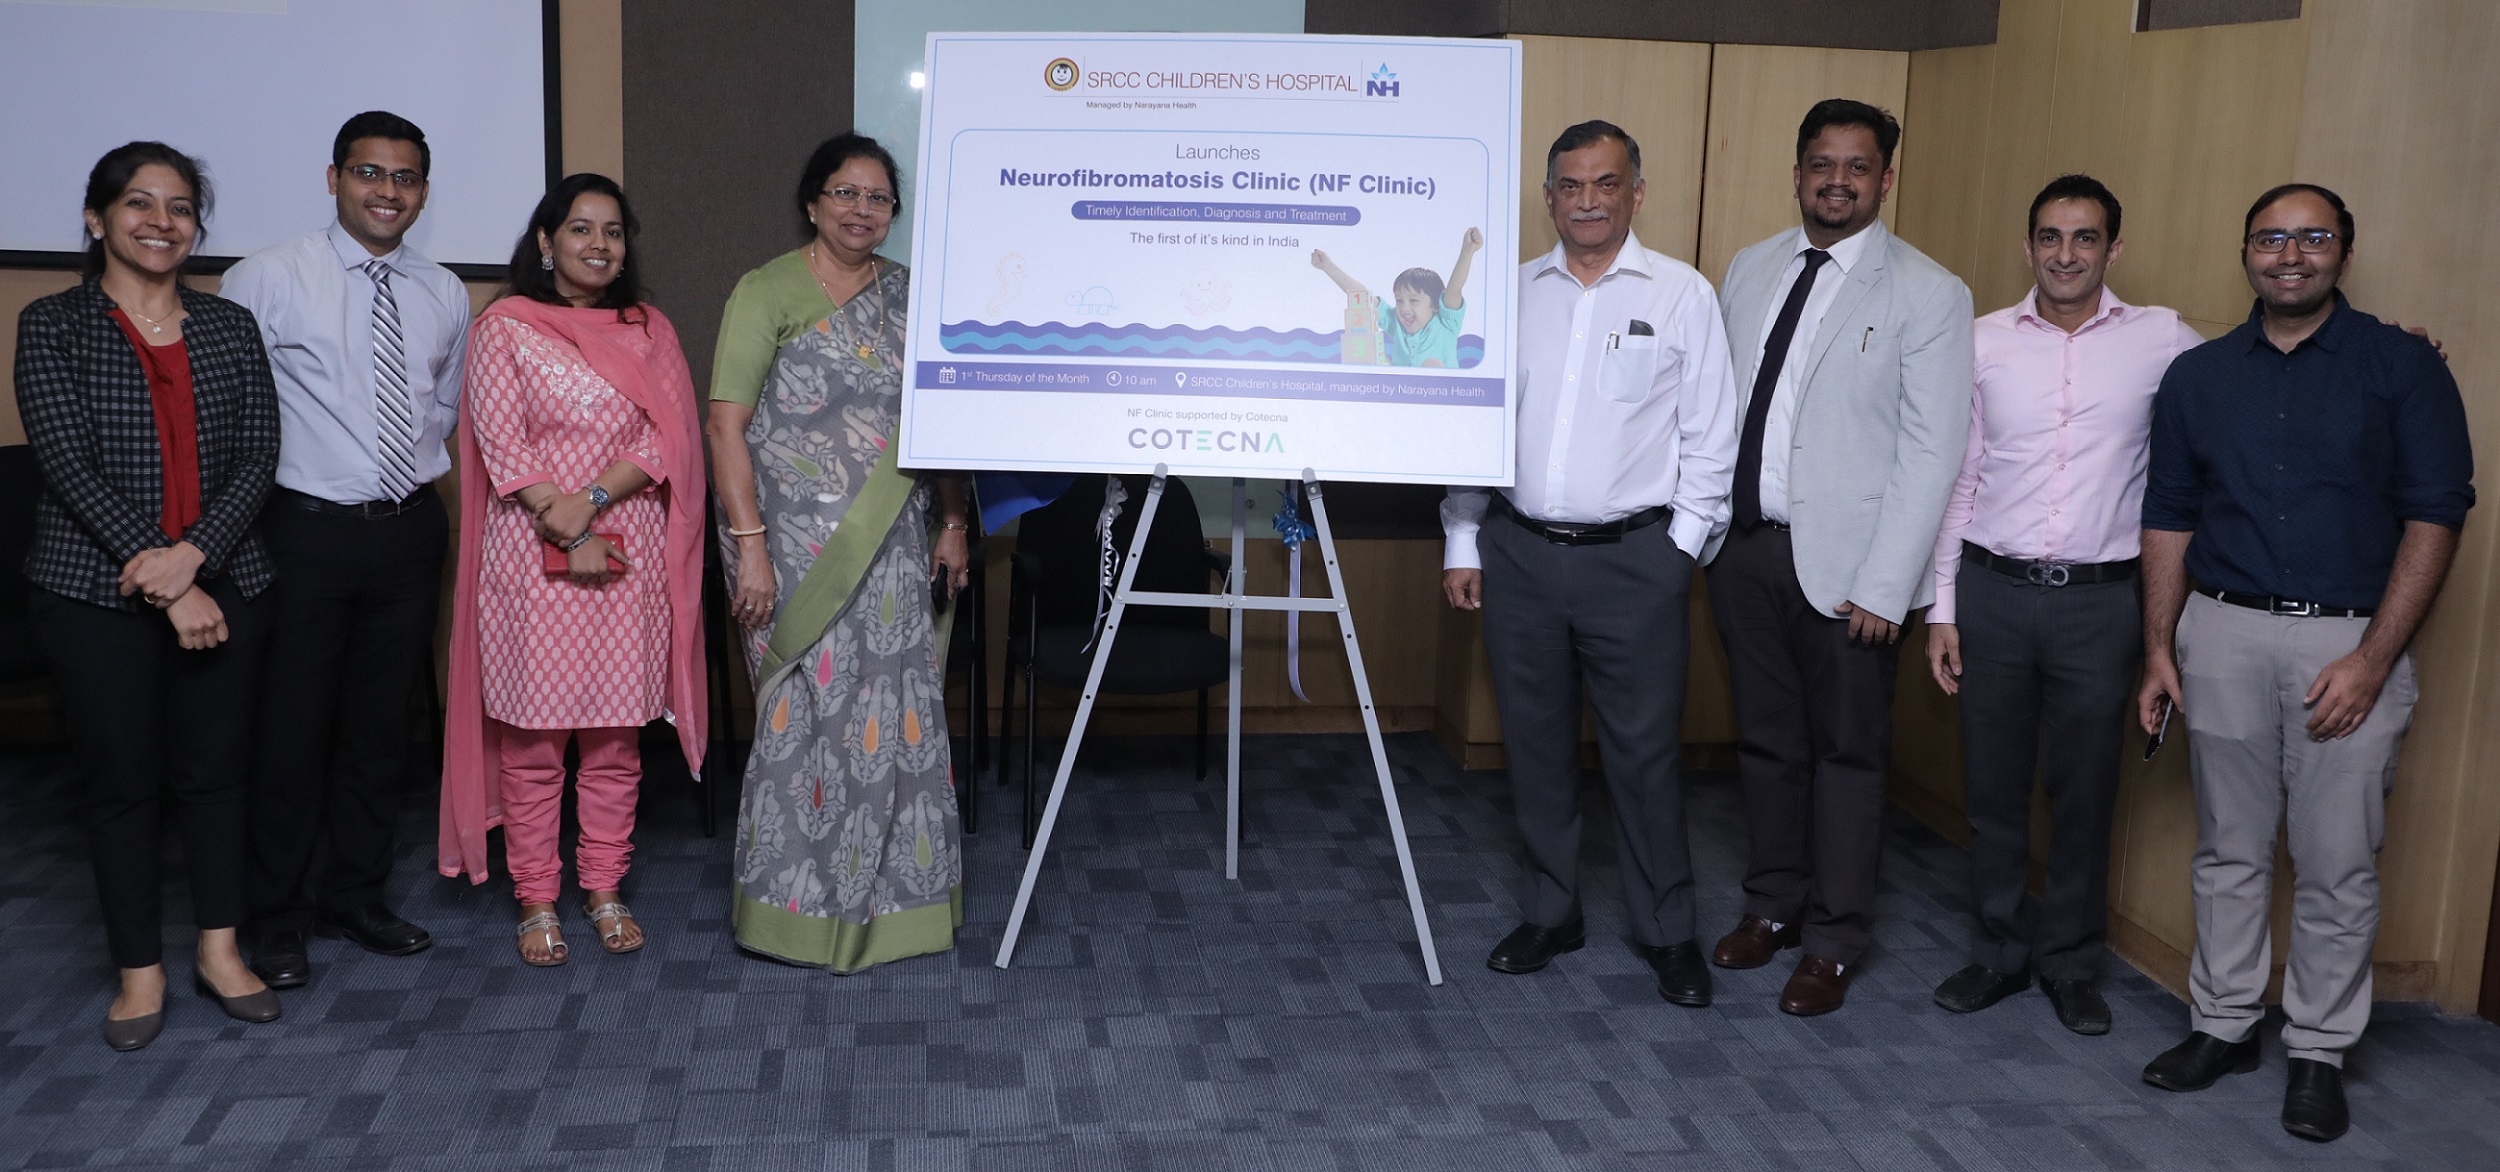  Dr. Sudhir Gupta, Dr. Sumeet Pawar, Dr. Viraj Sanghi, Dr. Divyata Hingwala, Dr. Shruti Bajaj, Dr. Uday Andar, Dr. Taral Nagda, Dr. Nehal Shah present at the inauguration of Narayana Health – SRCC Hospital launches first-of-its-kind Neurofibromatosis Clinic (NF Clinic) -Photo By GPN